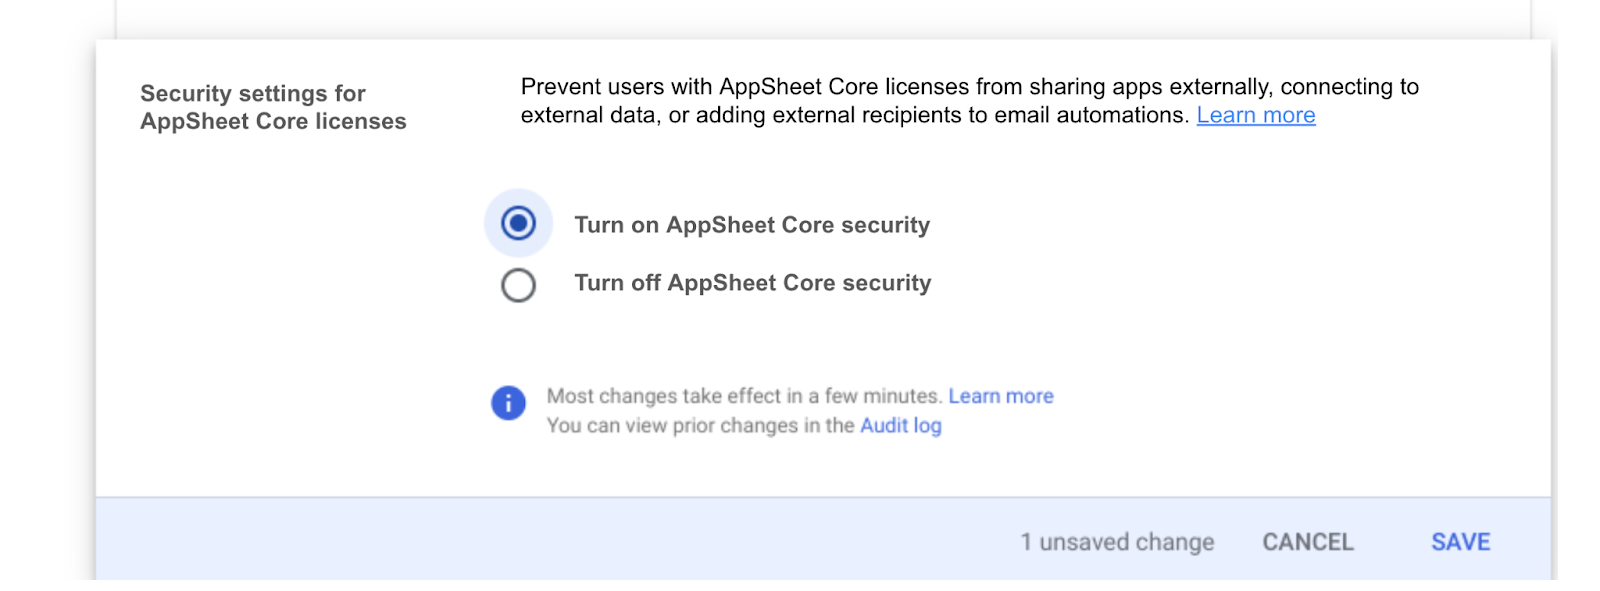 AppSheet security setting admins